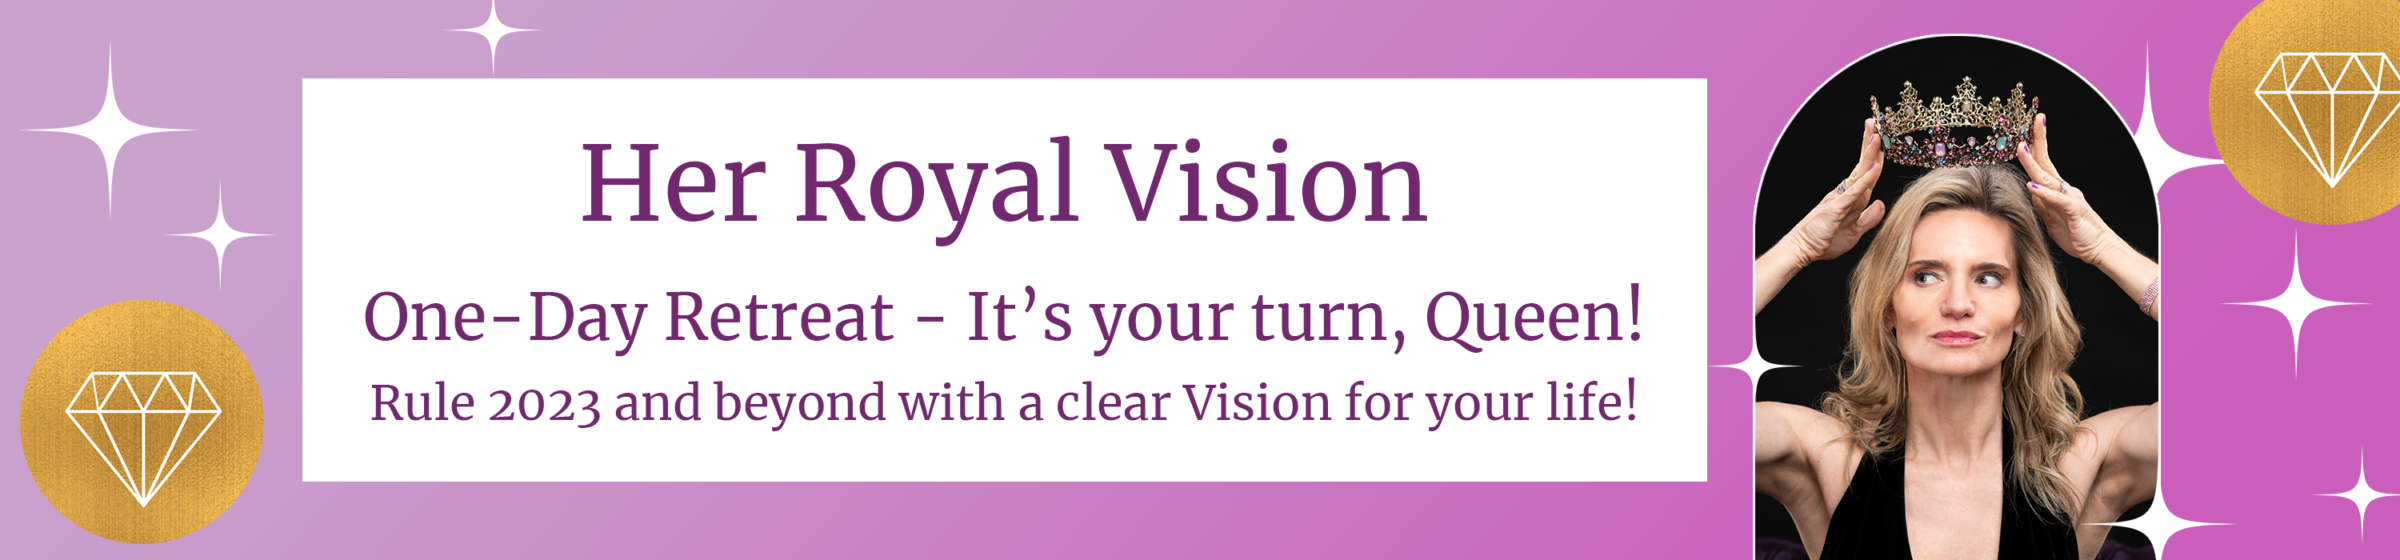 Her Royal Vision